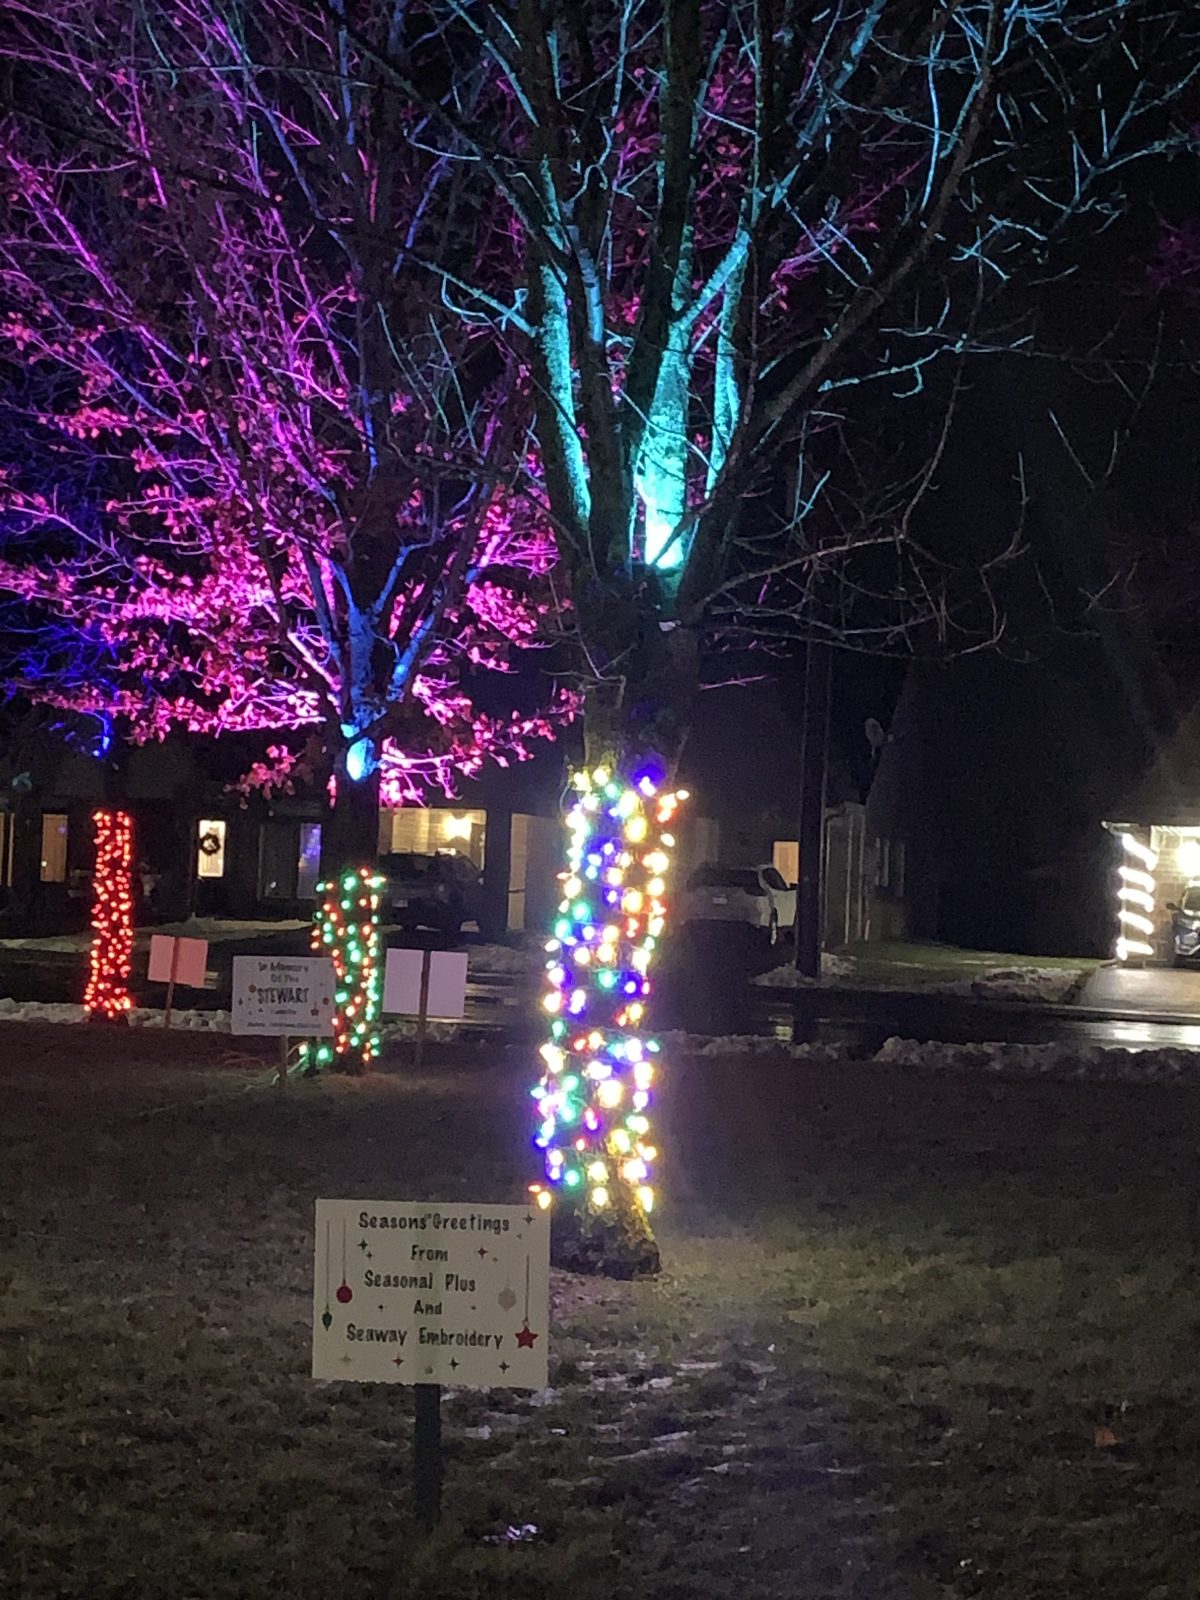 Community brings Christmas cheer to Memorial Square